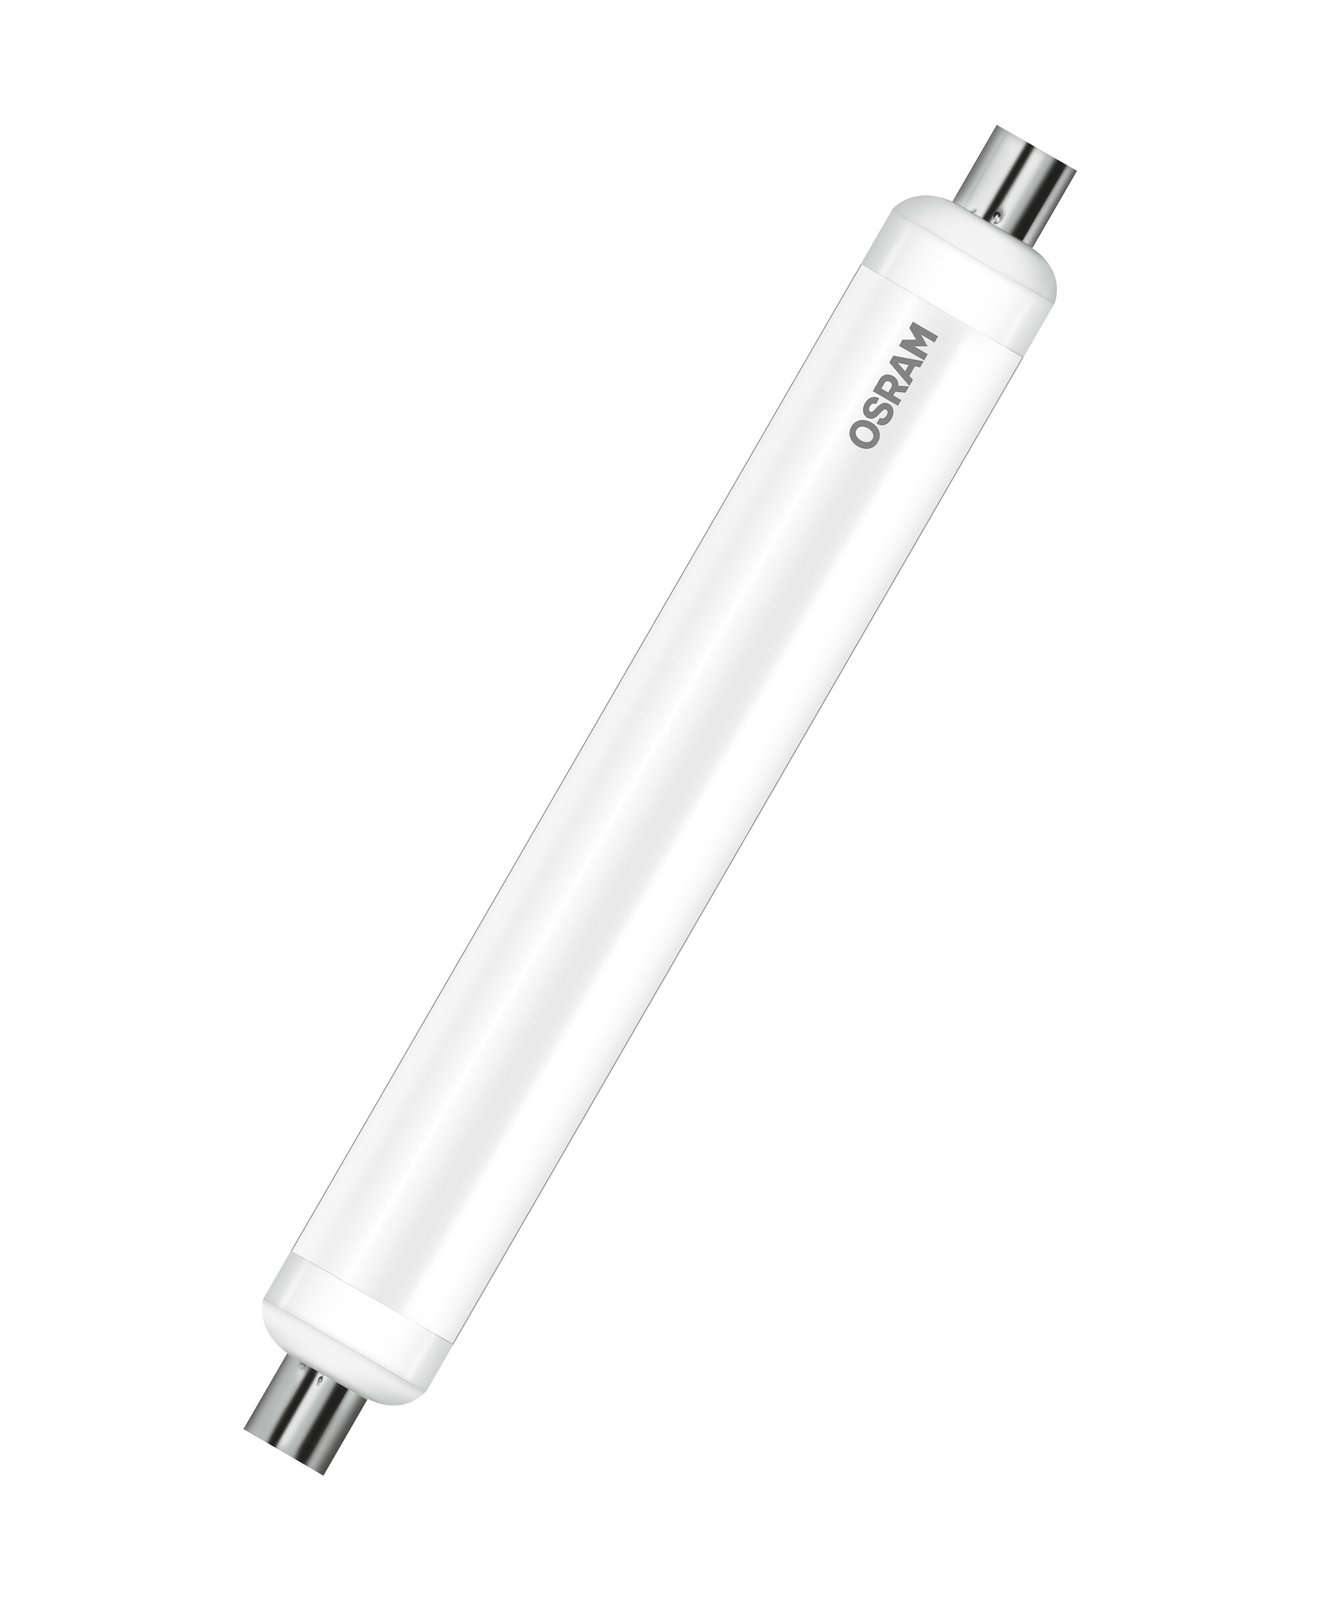 OSRAM LED tube bulb S19 9 W, 2,700 K, 830 lm